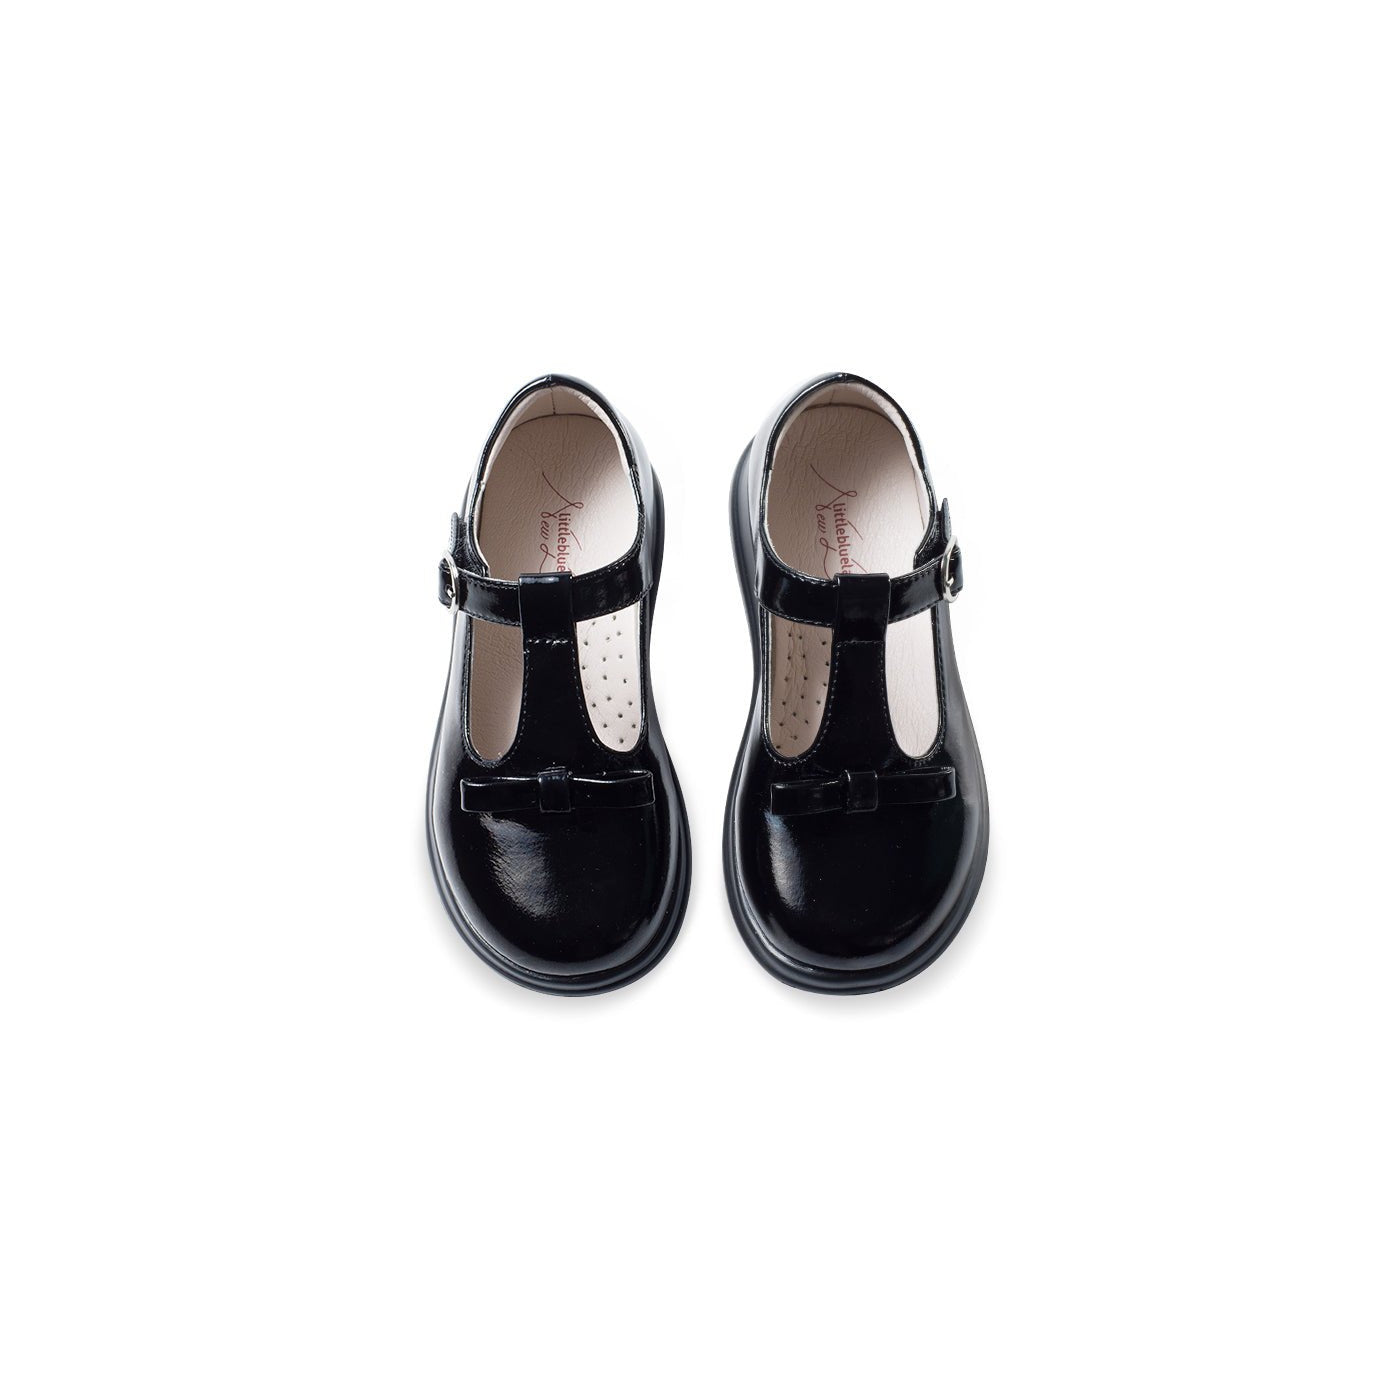 Fresh Meet Soft Sole Girl Patent Black T Bar School Shoes - 0cm